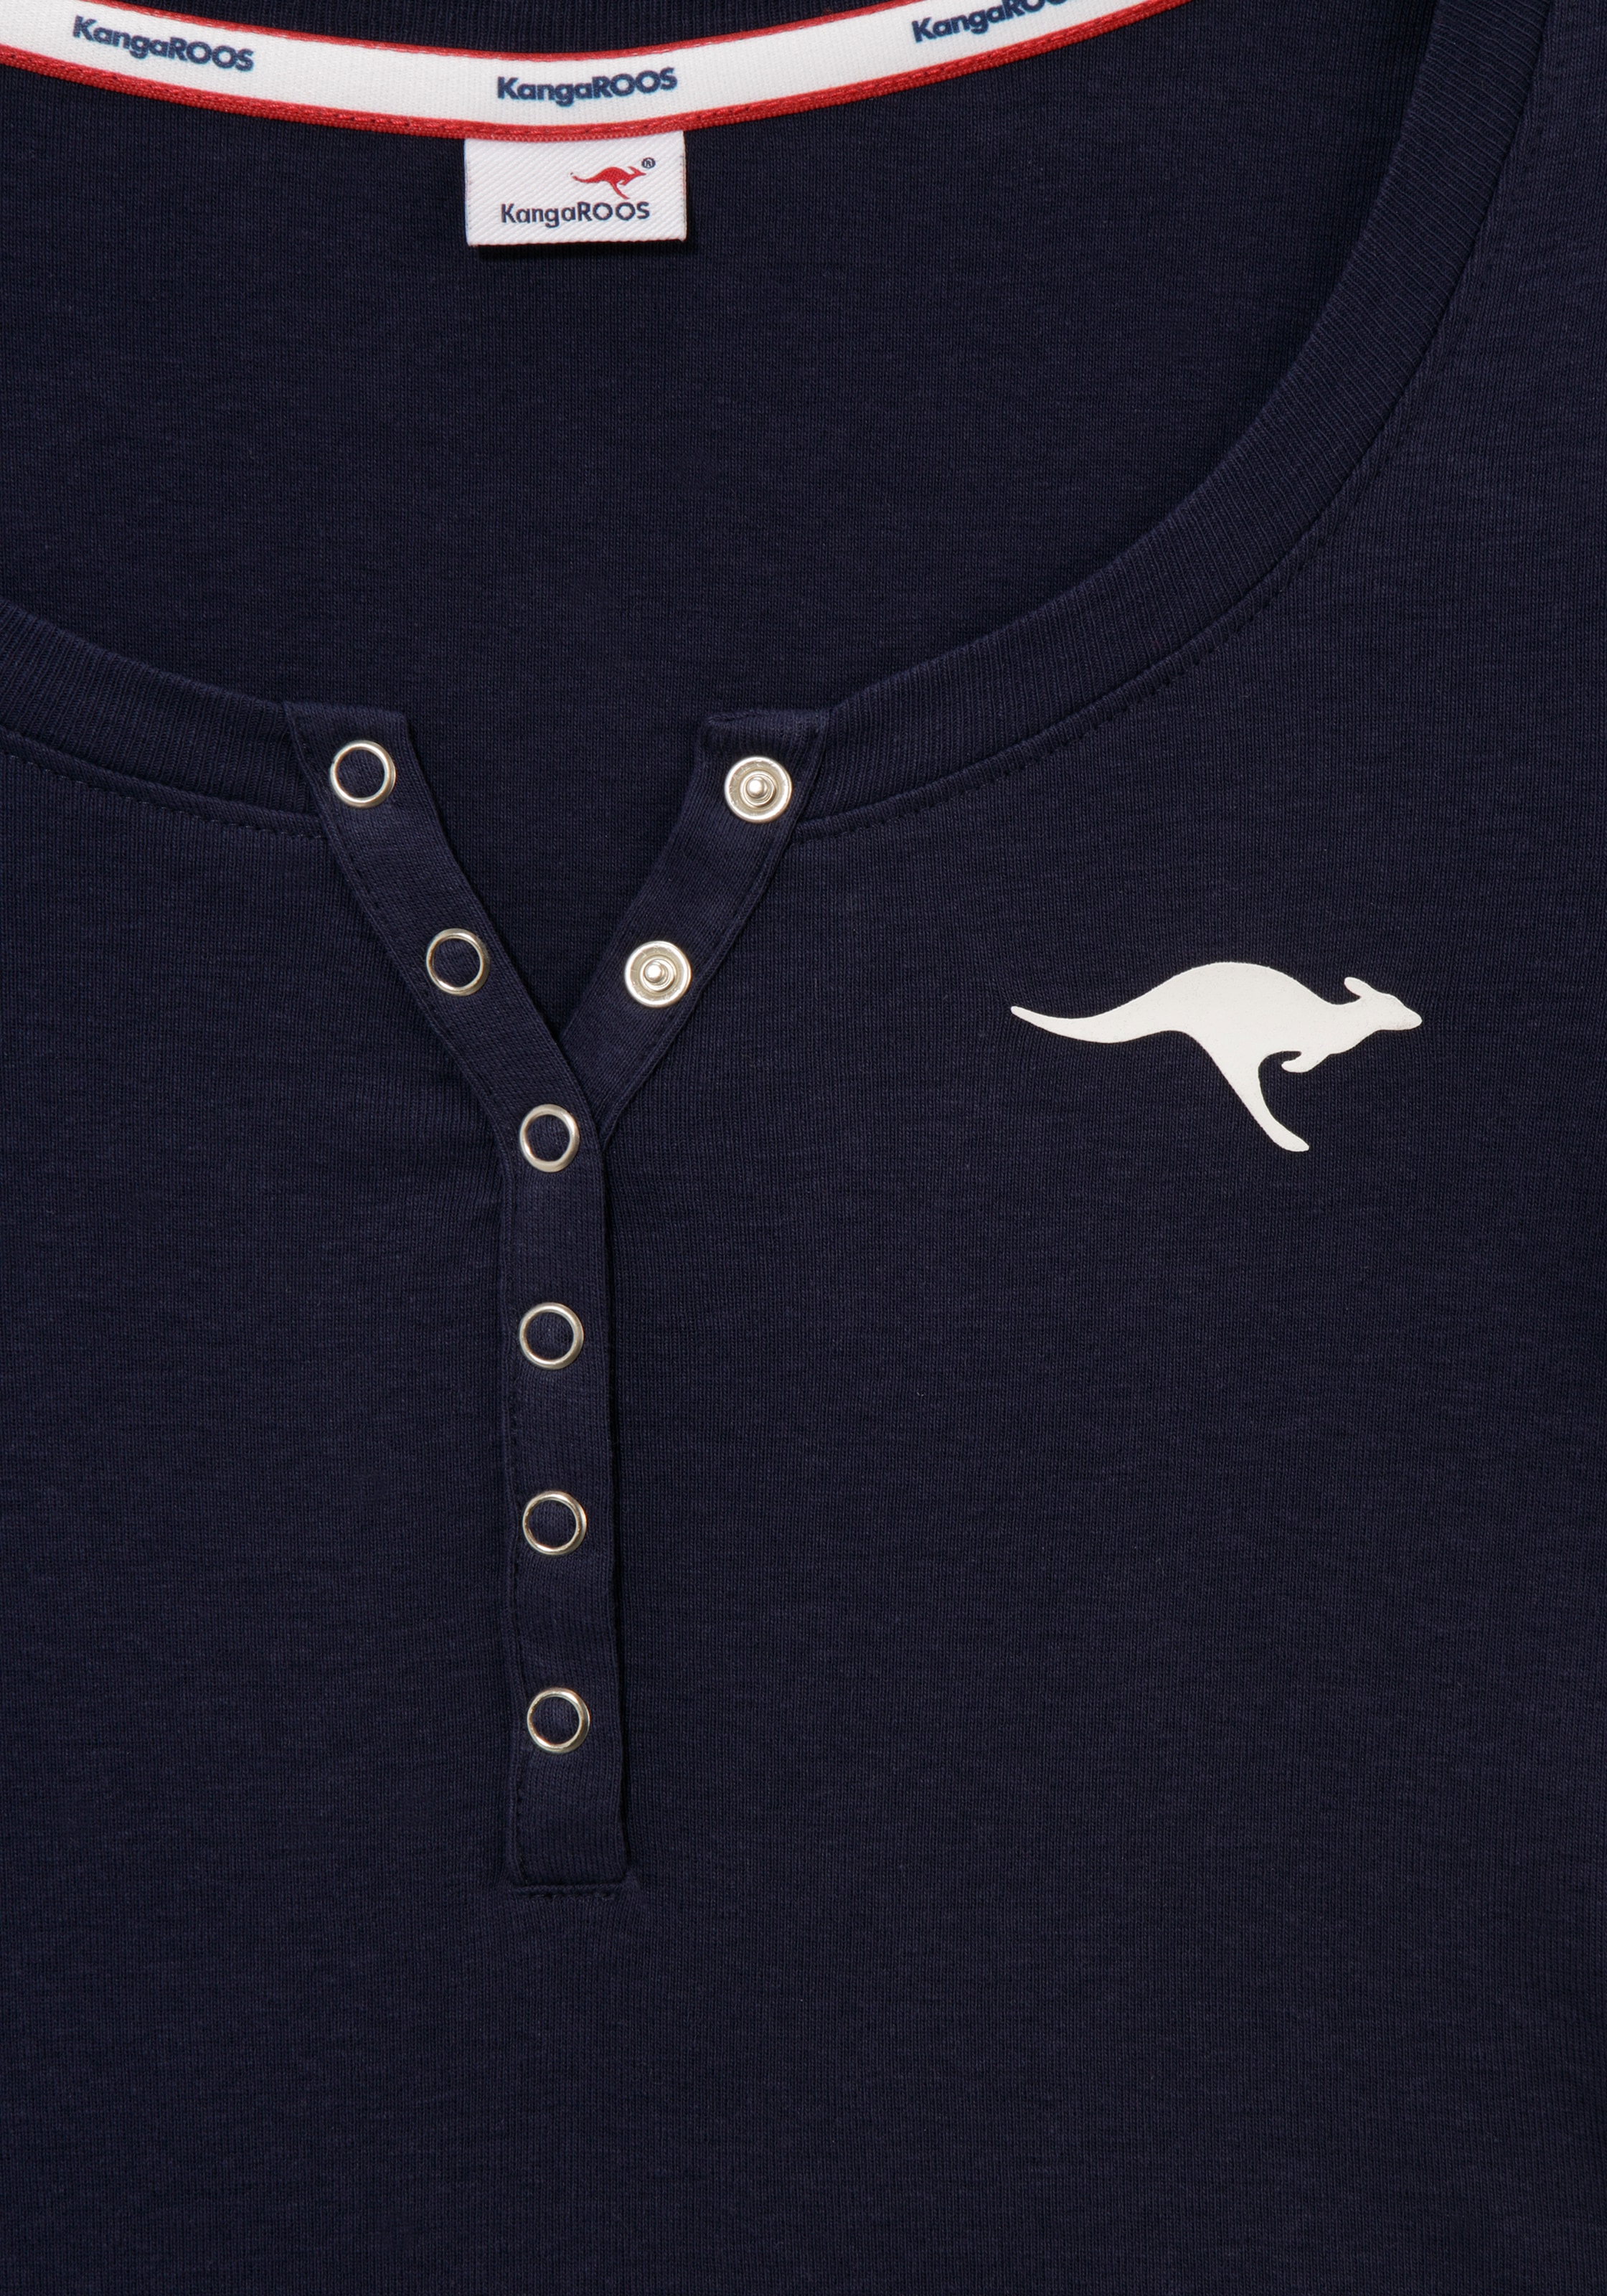 Black Friday KangaROOS Langarmshirt, BAUR Knopfleiste und | Känguru-Logodruck mit